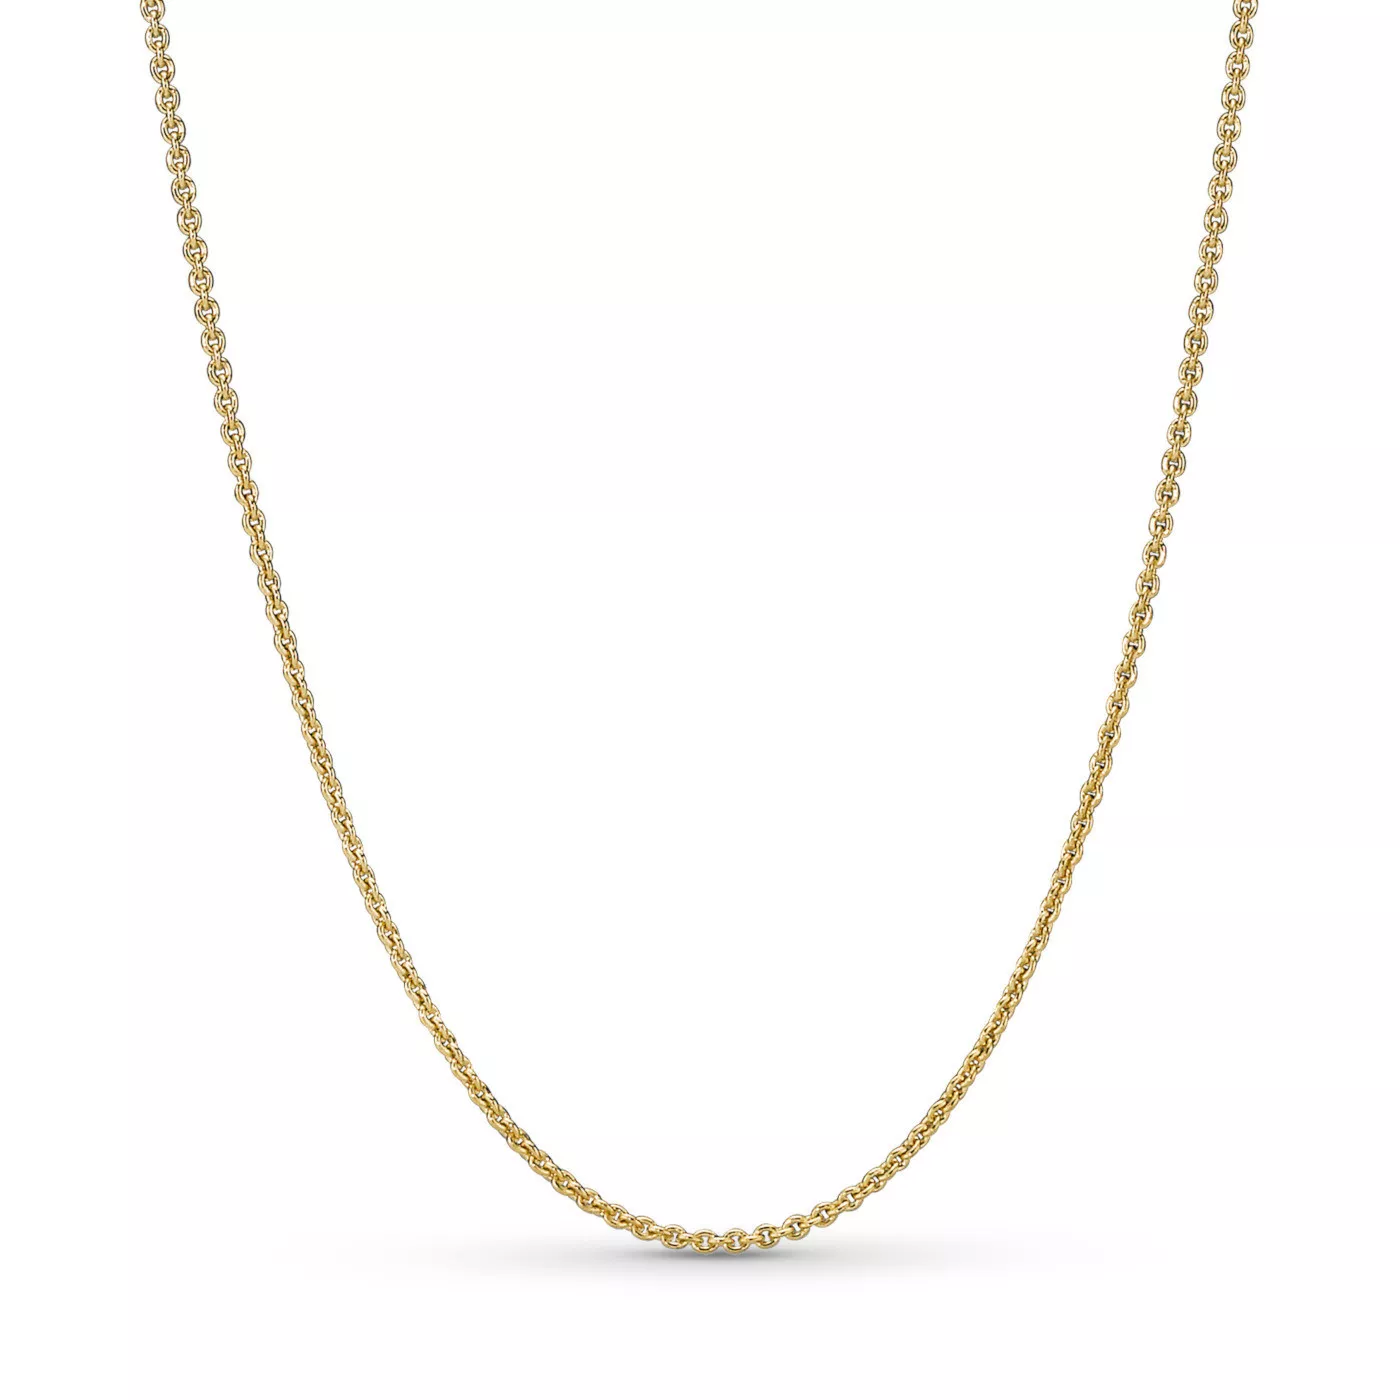 Pandora Shine 368727 Ketting Cable Chain zilver goudkleurig 45 cm